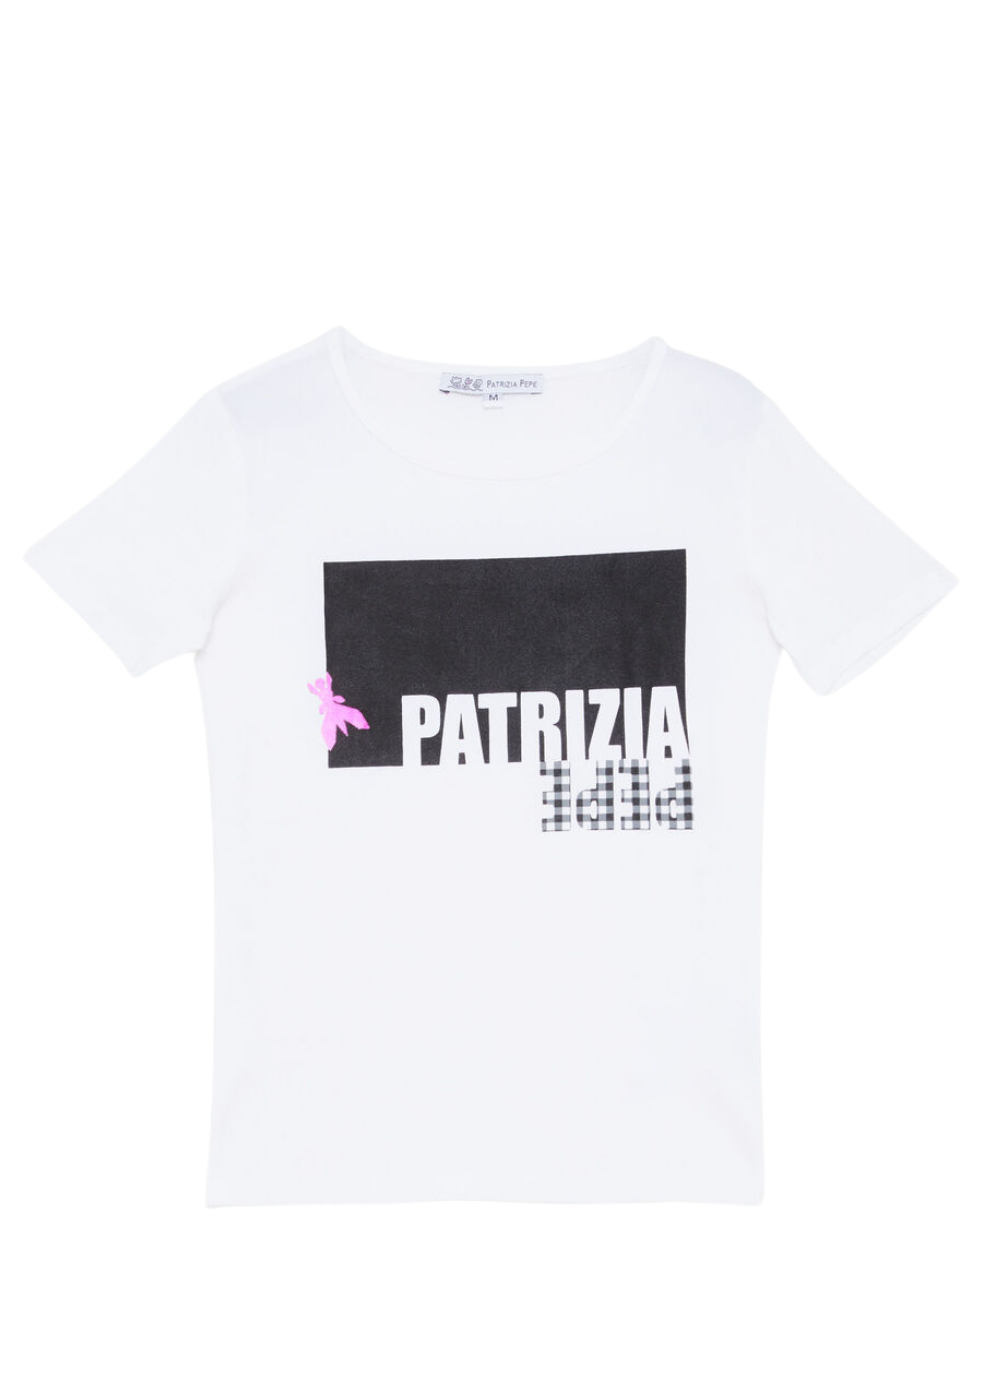 Featured image for “PATRIZIA PEPE T-SHIRT LOGO”